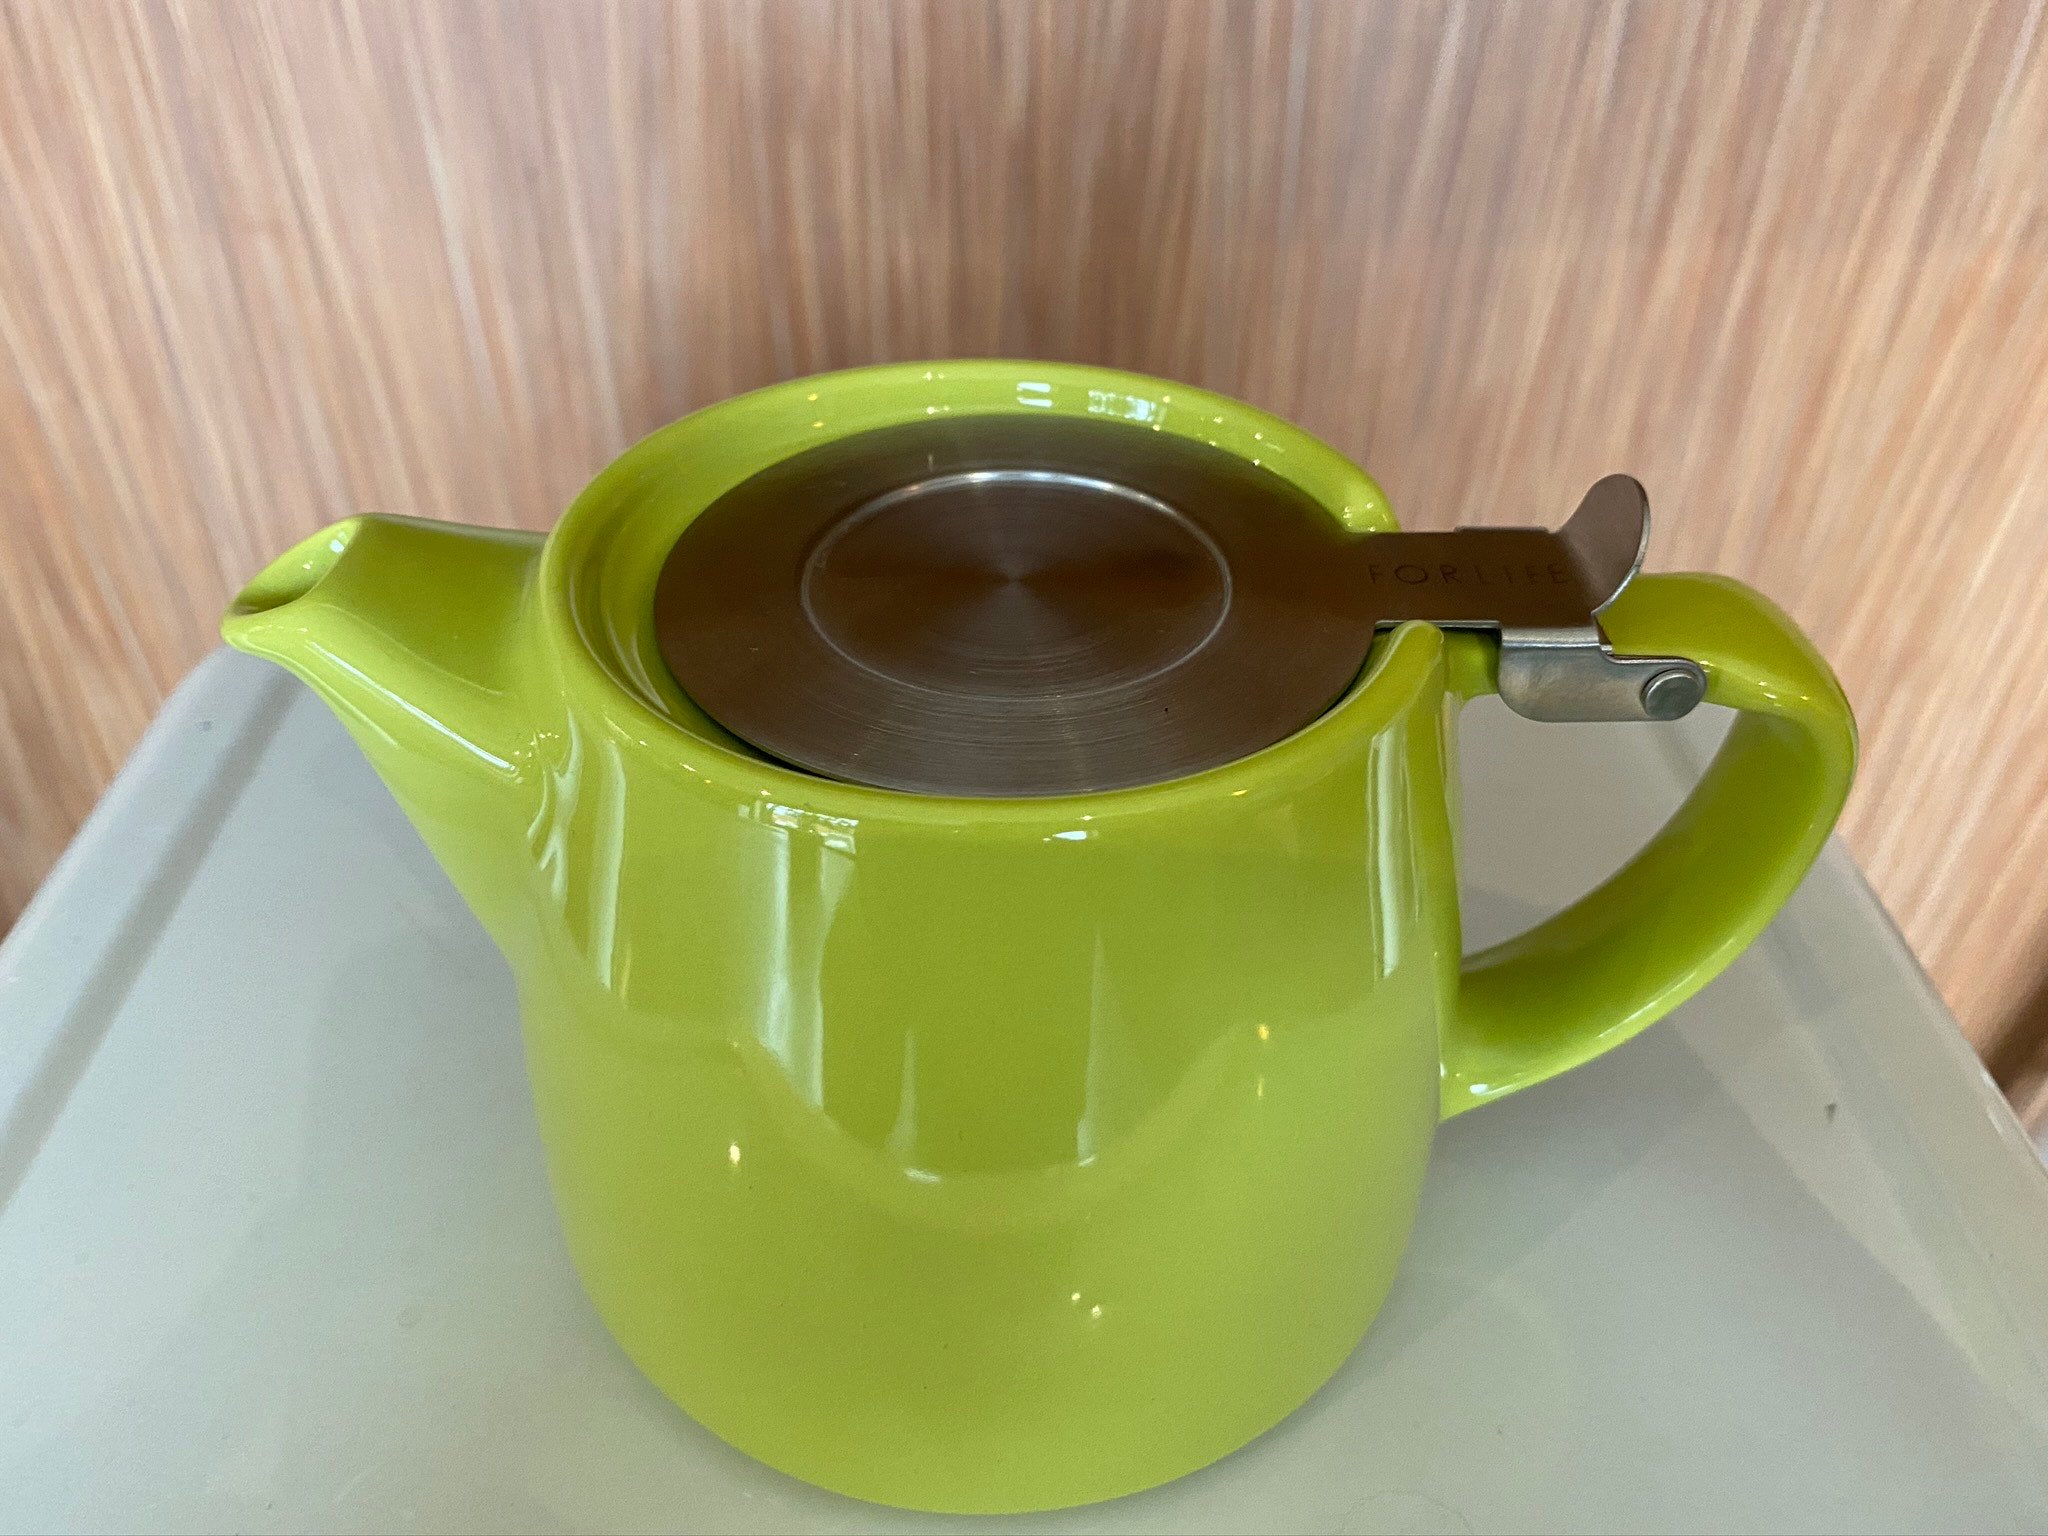 Lime stump teapot, For Life brand